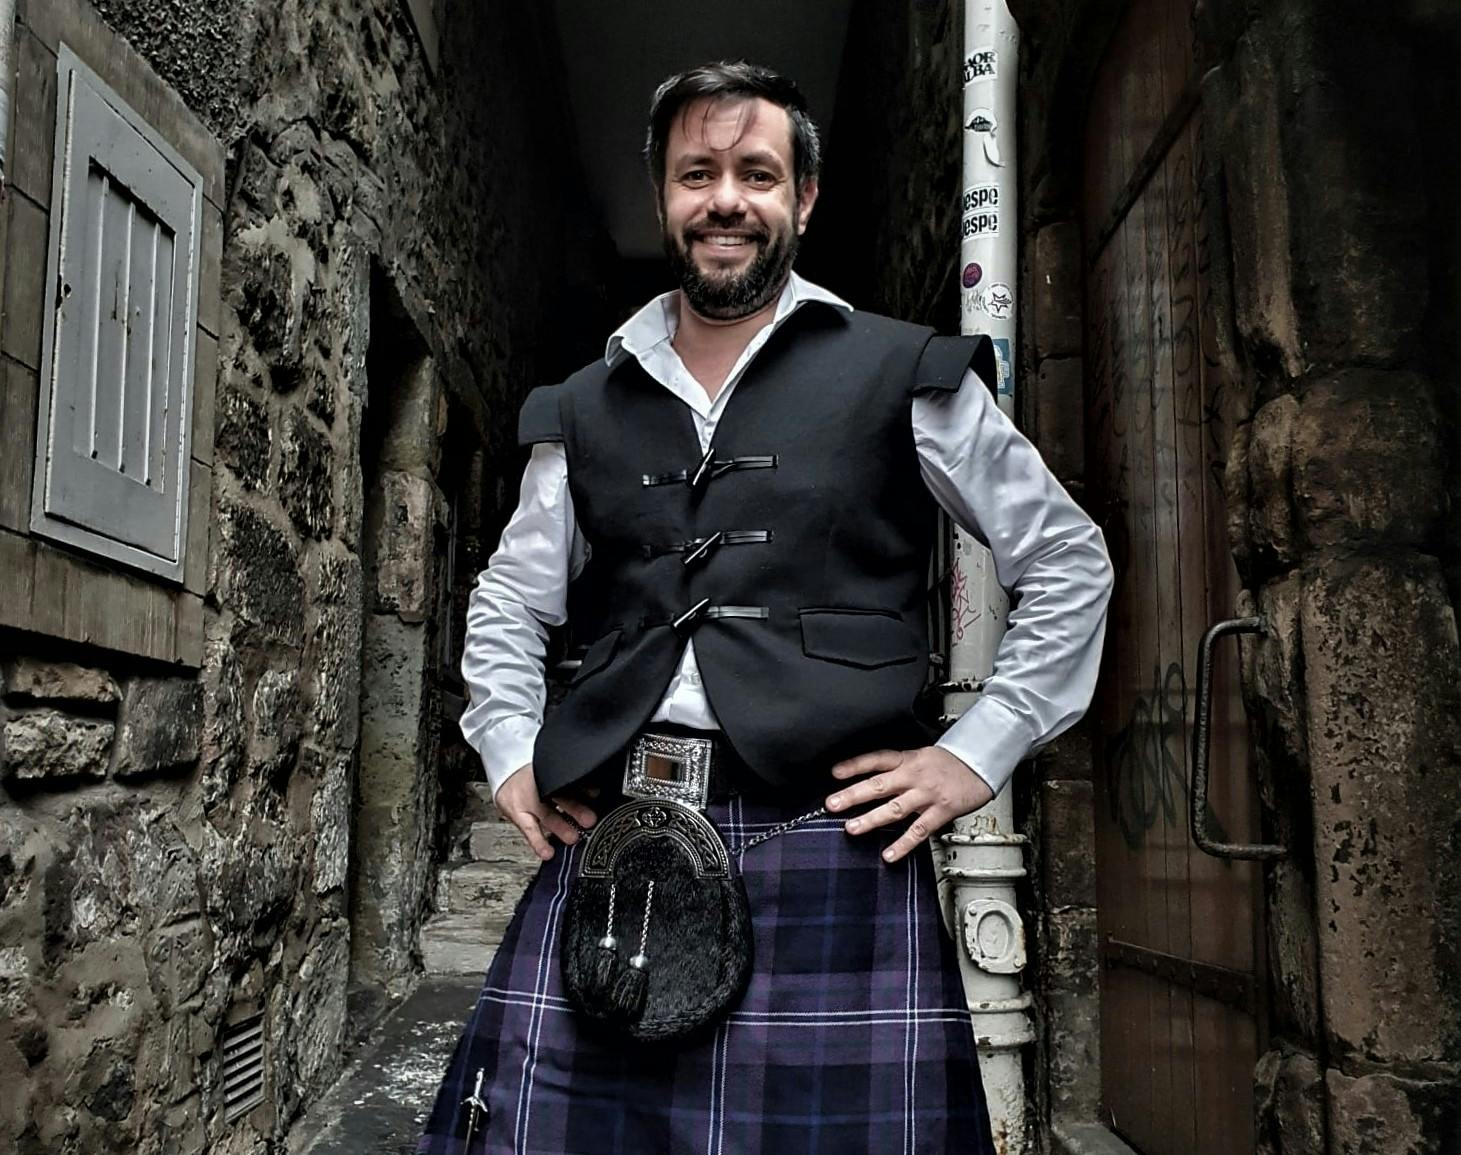 Highlander guided tour in Edinburgh